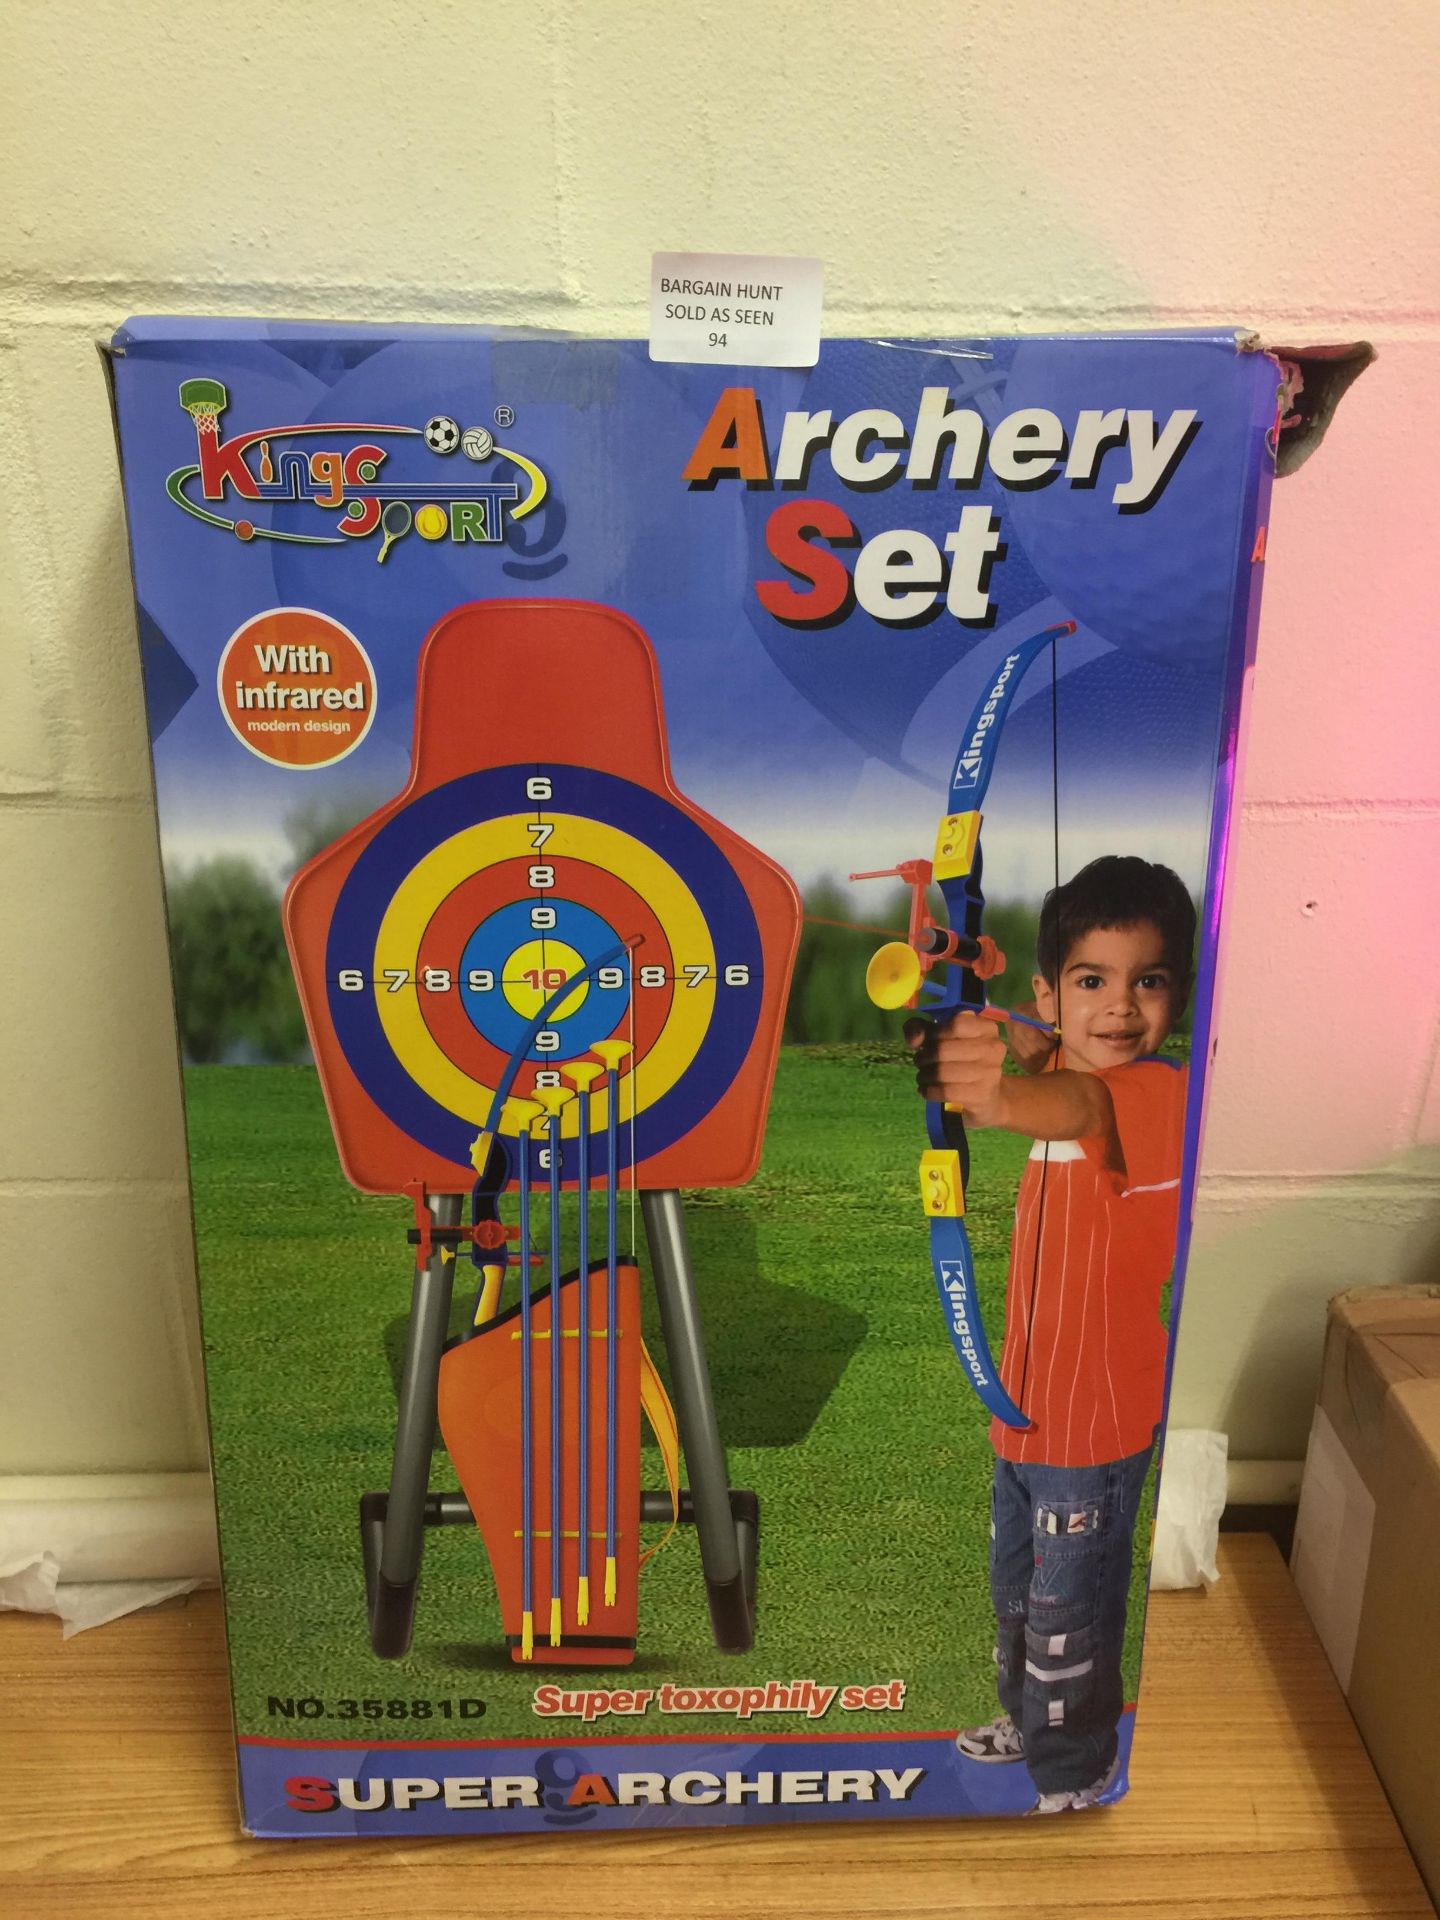 Super Archery Playset